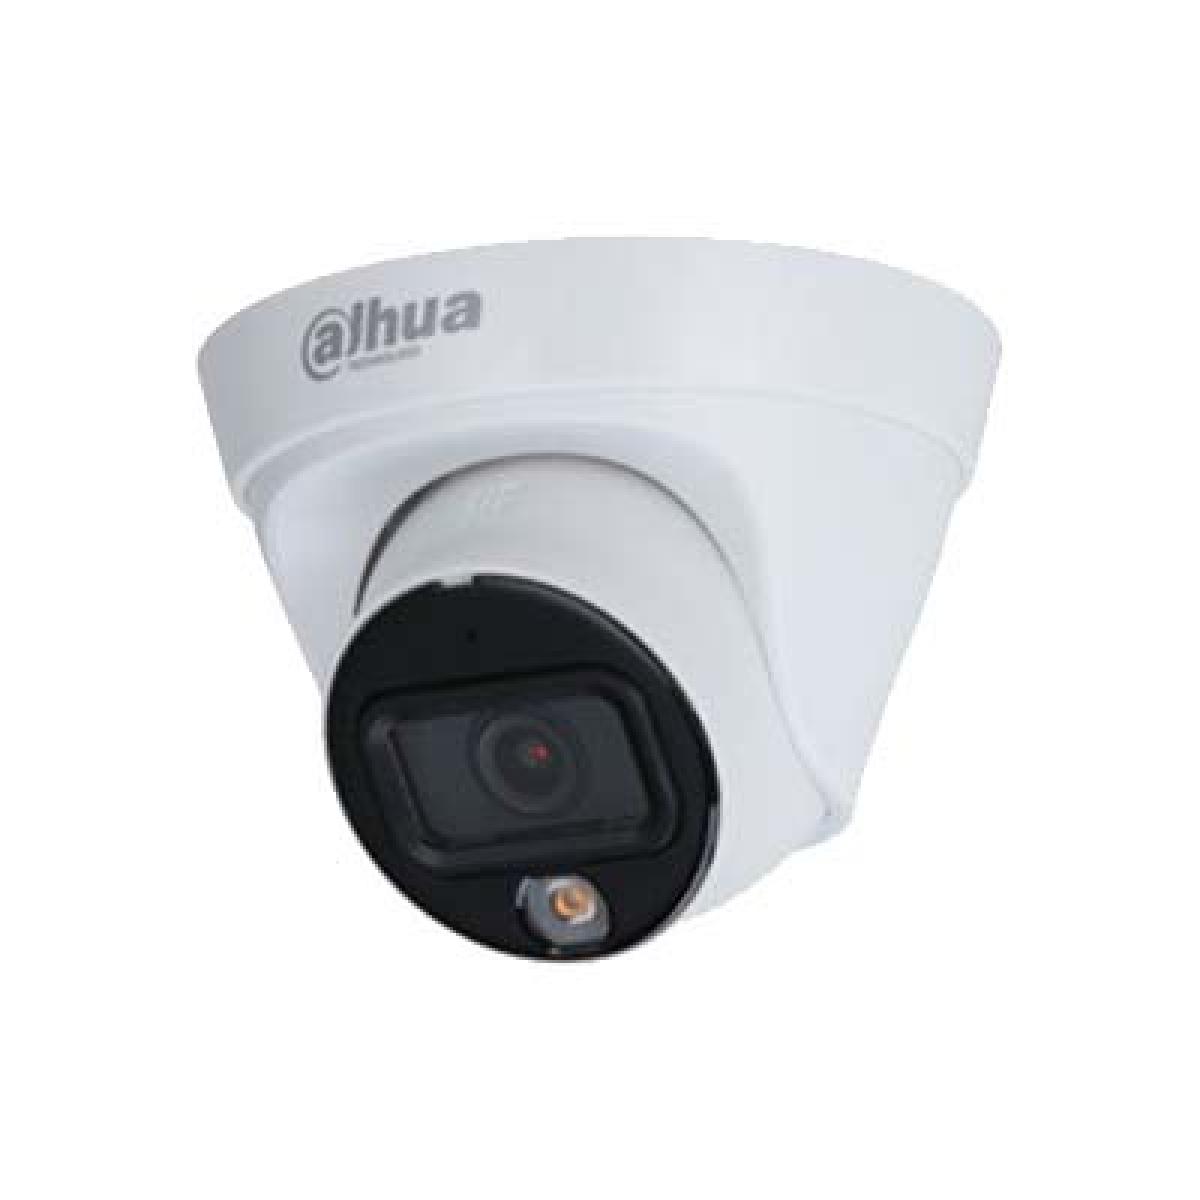 Dahua DH-IPC-HDW1439T1-LED-S4 4MP Entry Full-color Fixed-focal Eyeball Network Camera